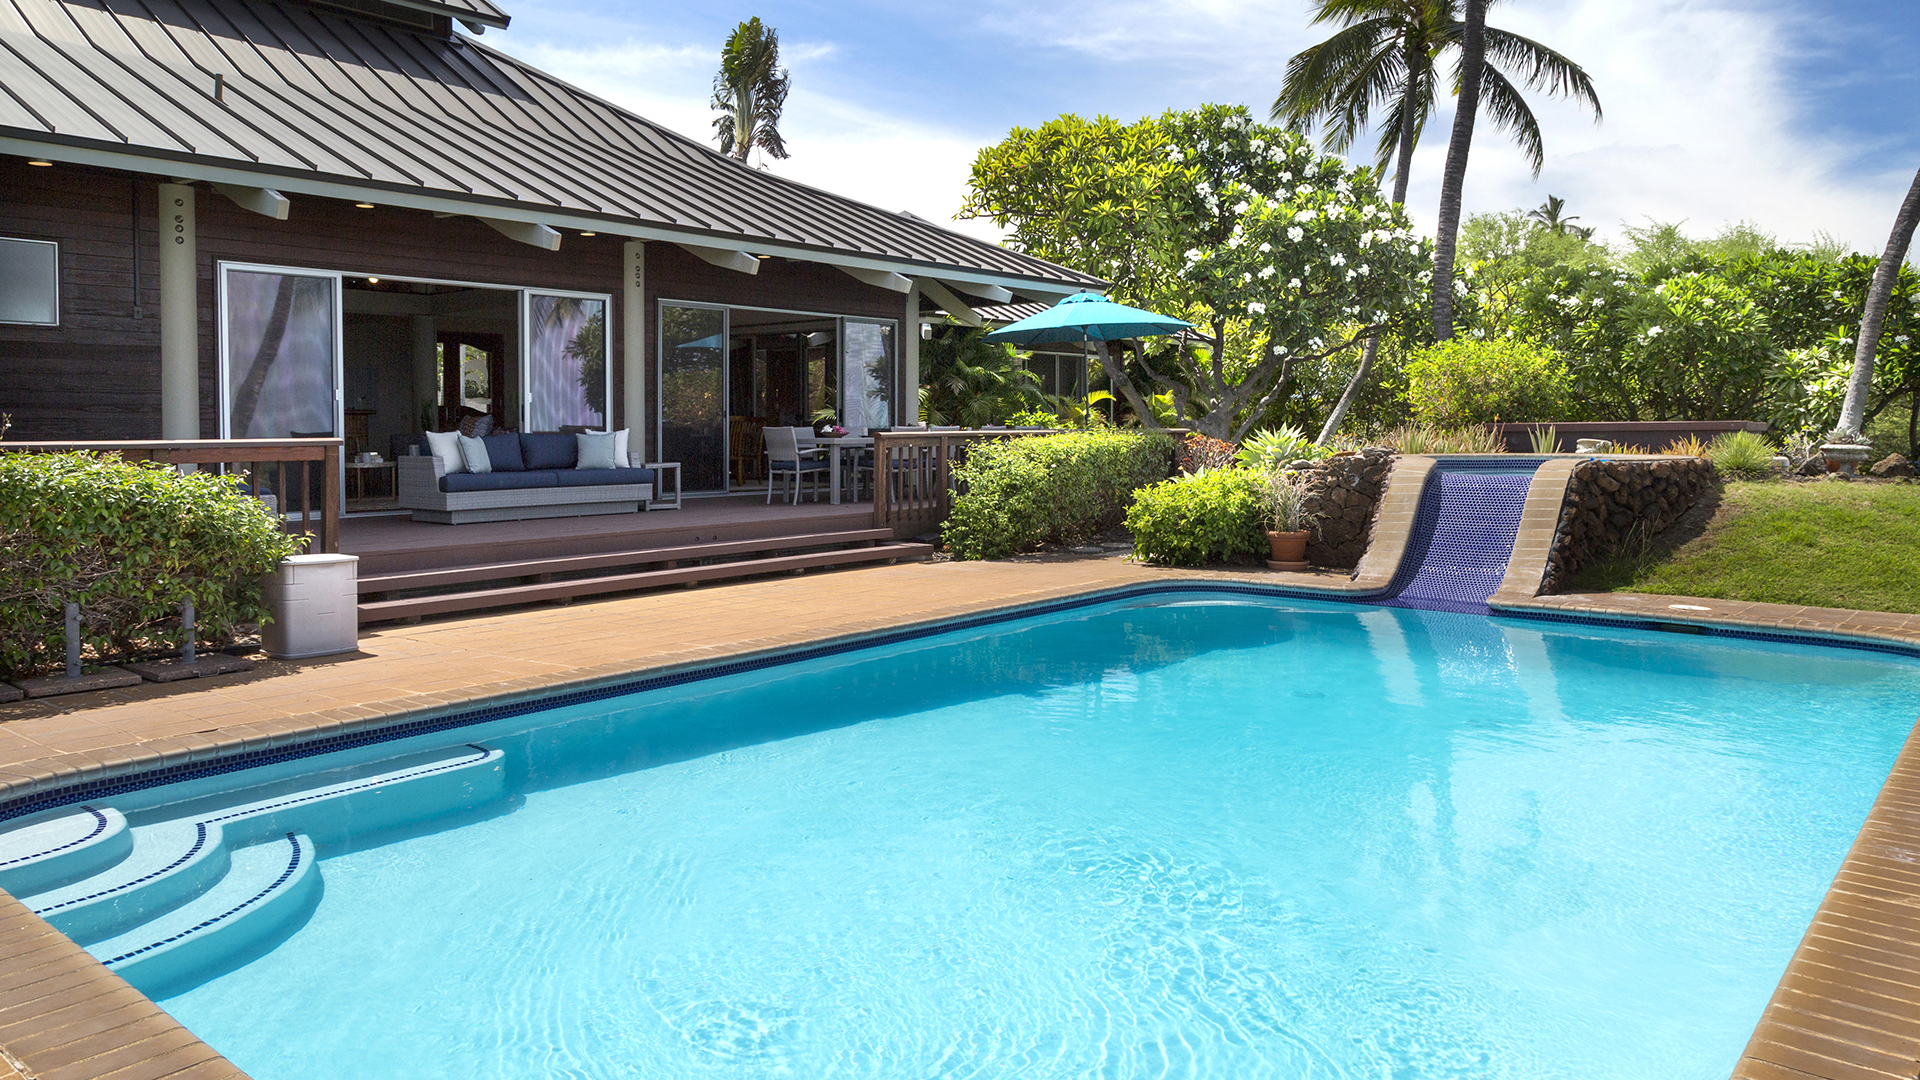 Hawaii Vacation Rental Home, hawaii homeowner guide, property manager hawaii, hawaii home upgrades, increase rental value